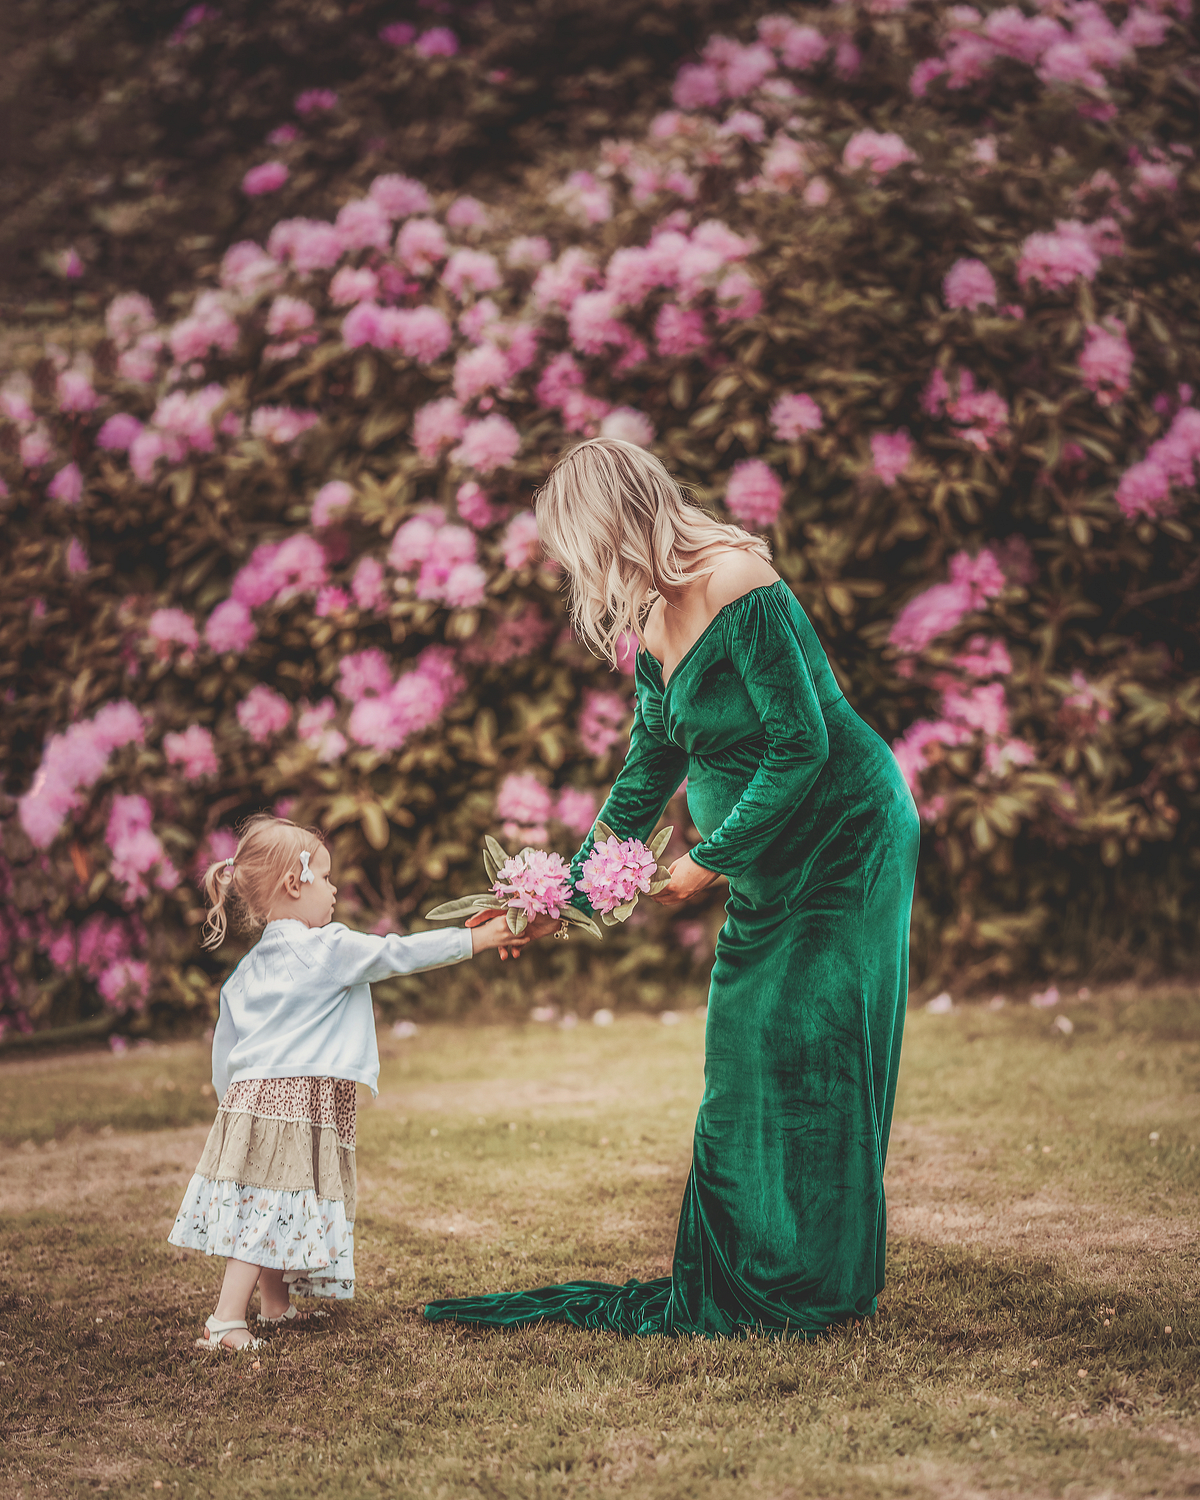 Cookstown Maternity photographer | KAptured Moments